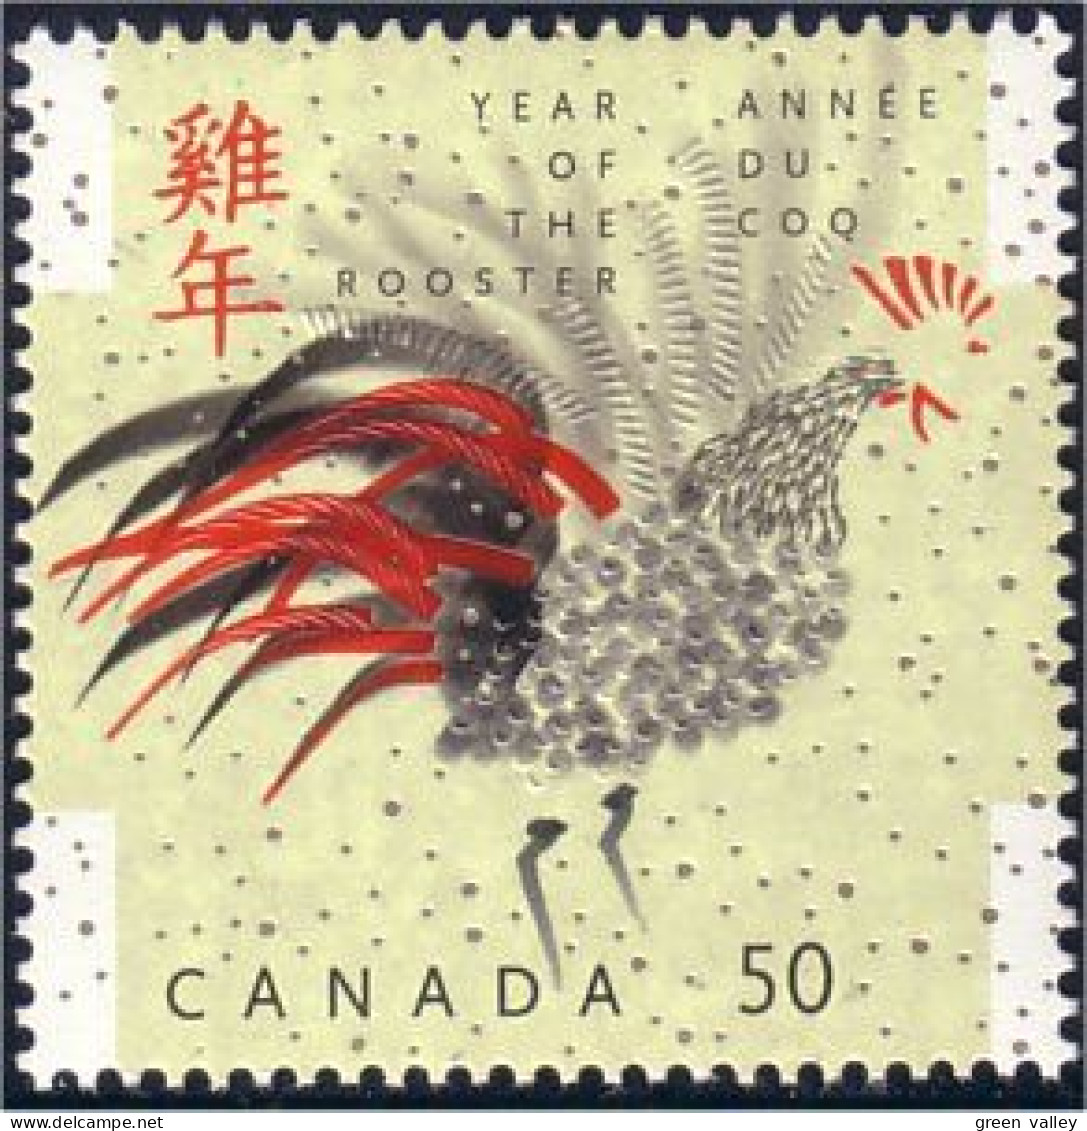 Canada Coq Rooster Huhn MNH ** Neuf SC (C20-83d) - Hühnervögel & Fasanen